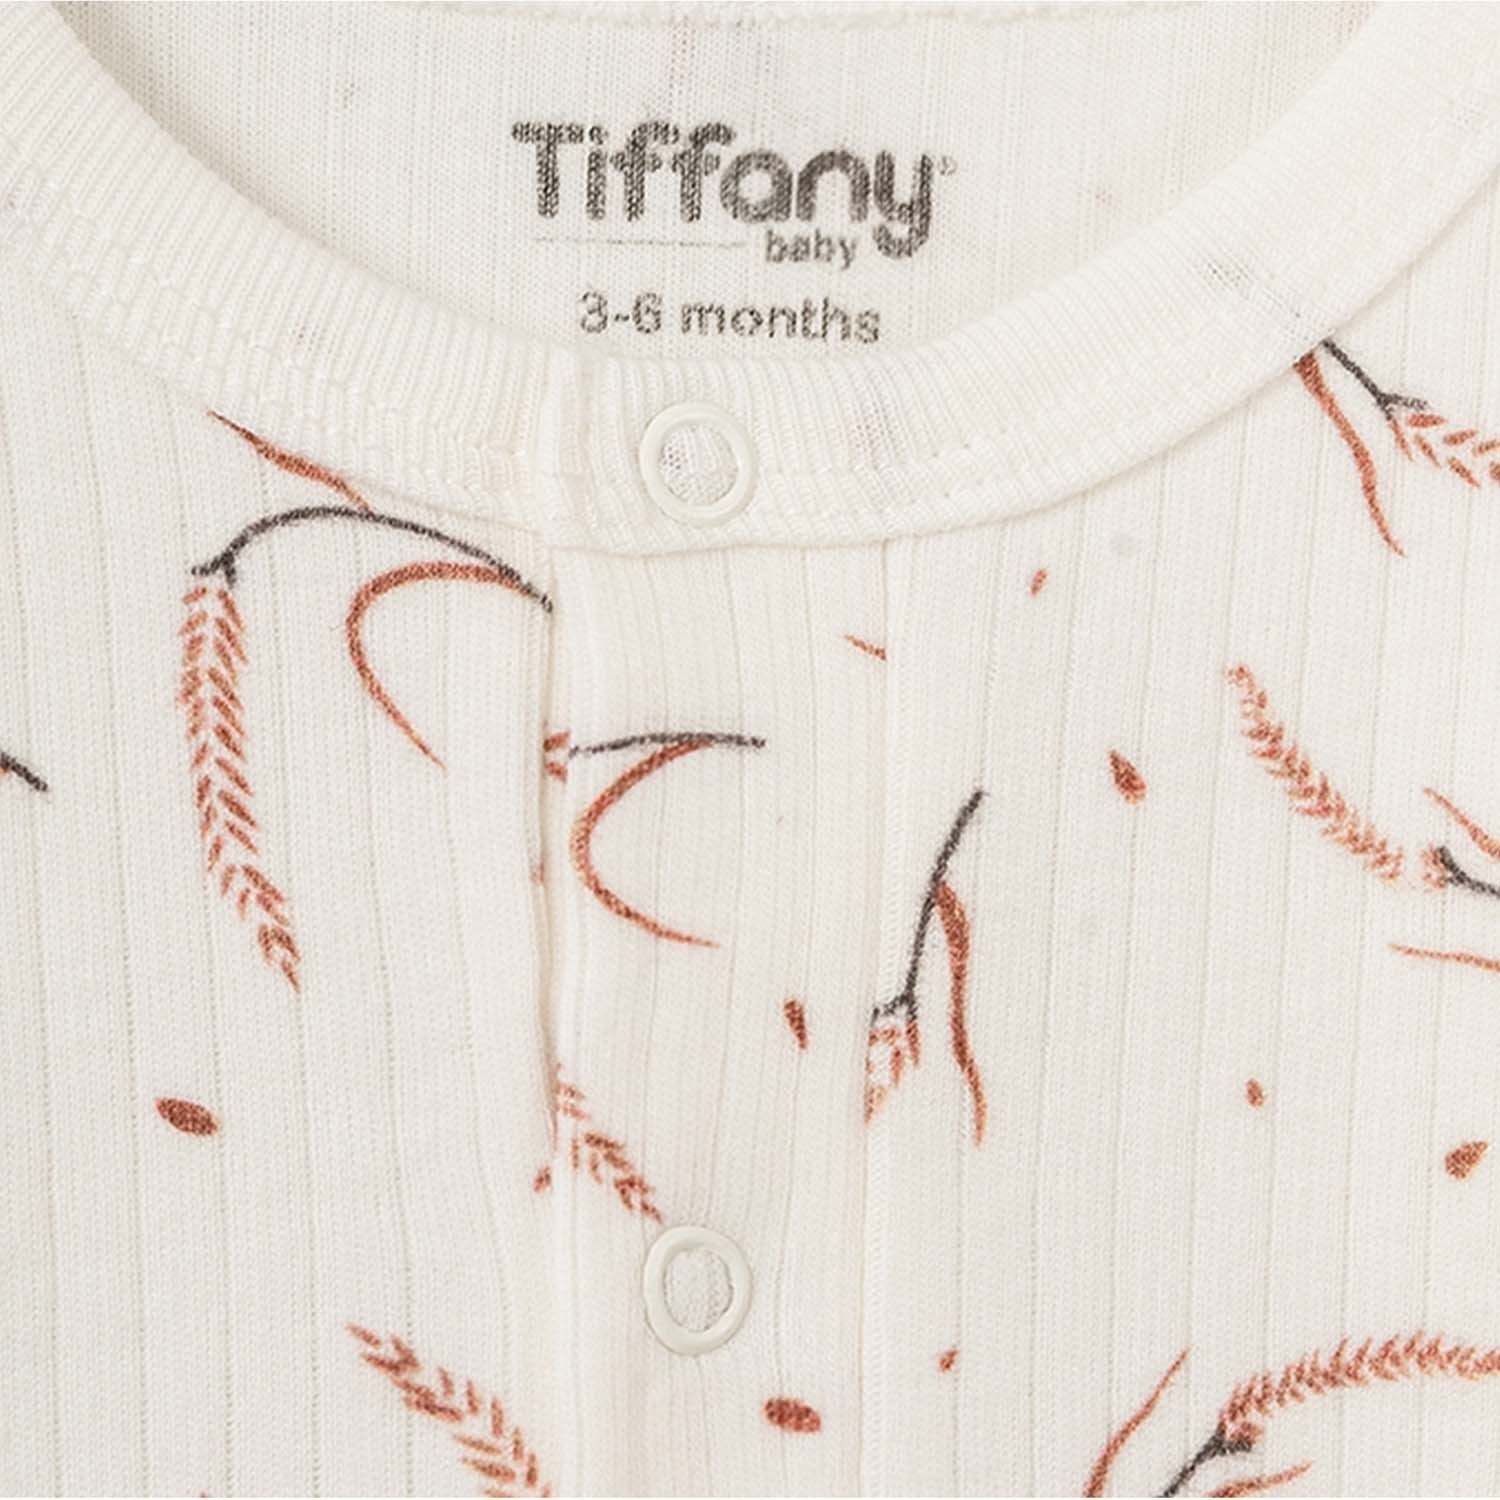 Tiffany Baby Wheat Theme Bebek Tulumu 53004 Ekru